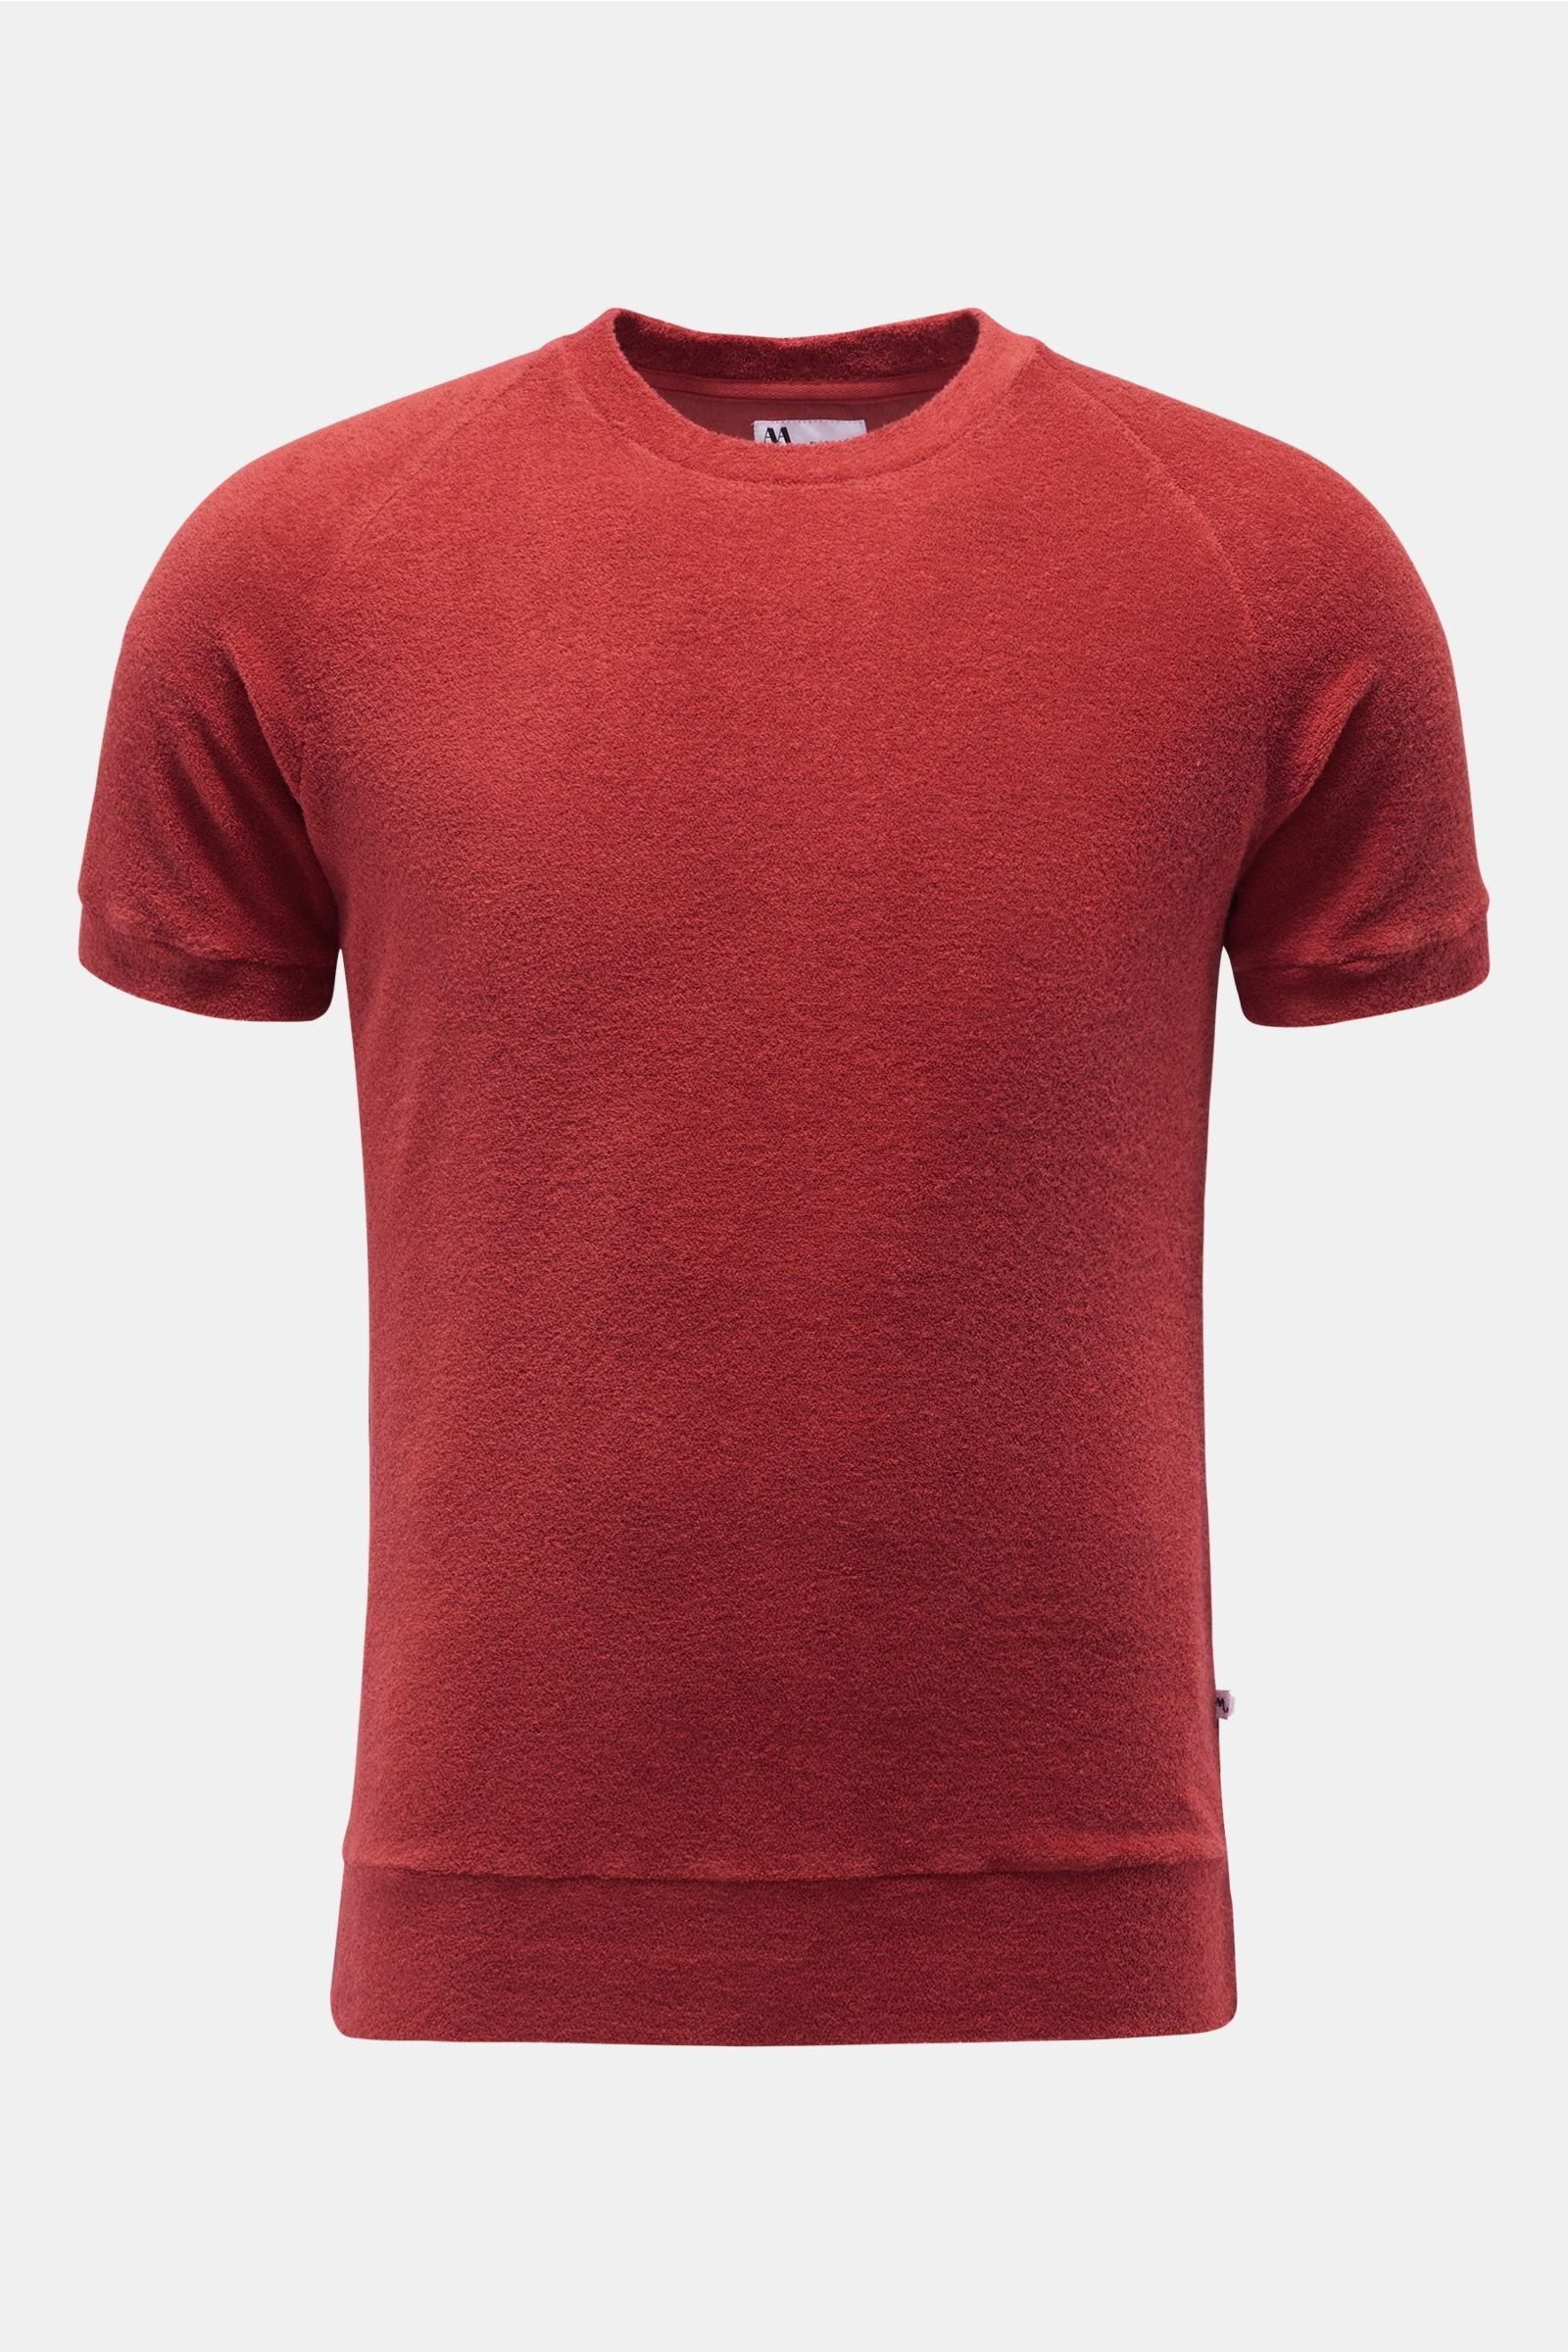 Terry short sleeve sweatshirt 'Aagamennone' red